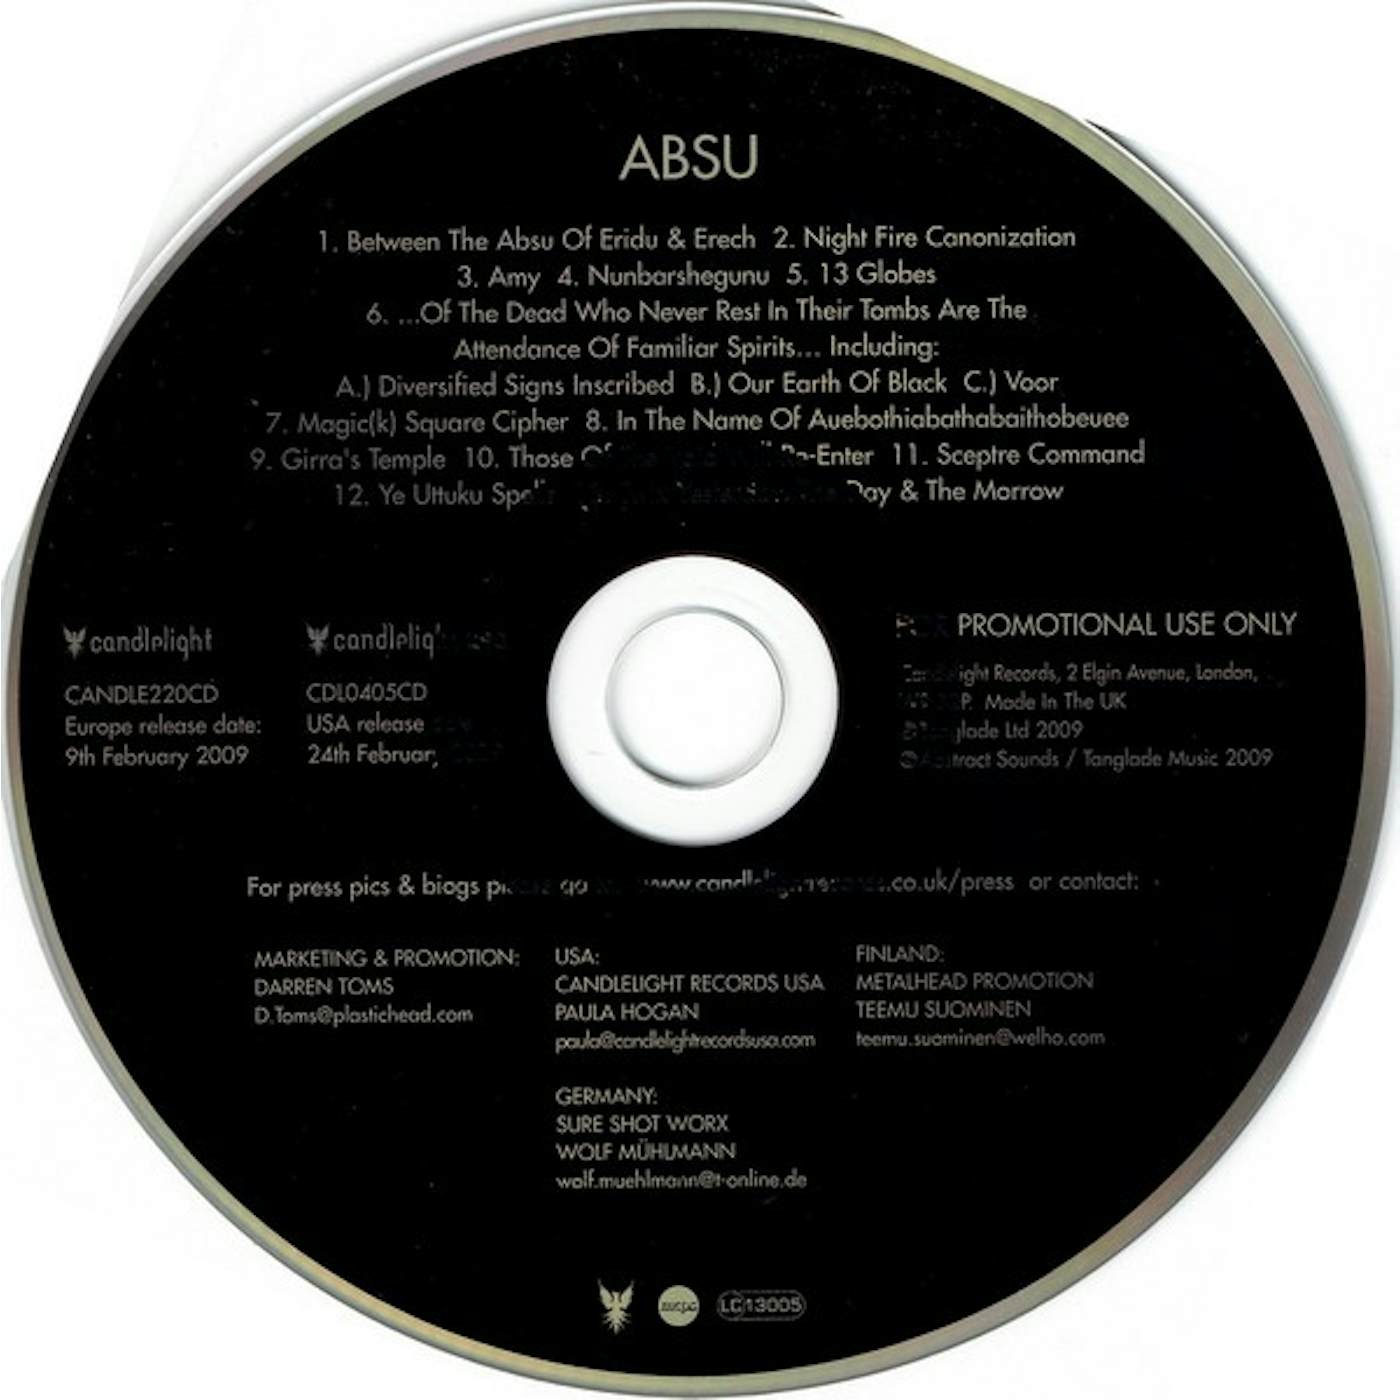 ABSU Vinyl Record - UK Release